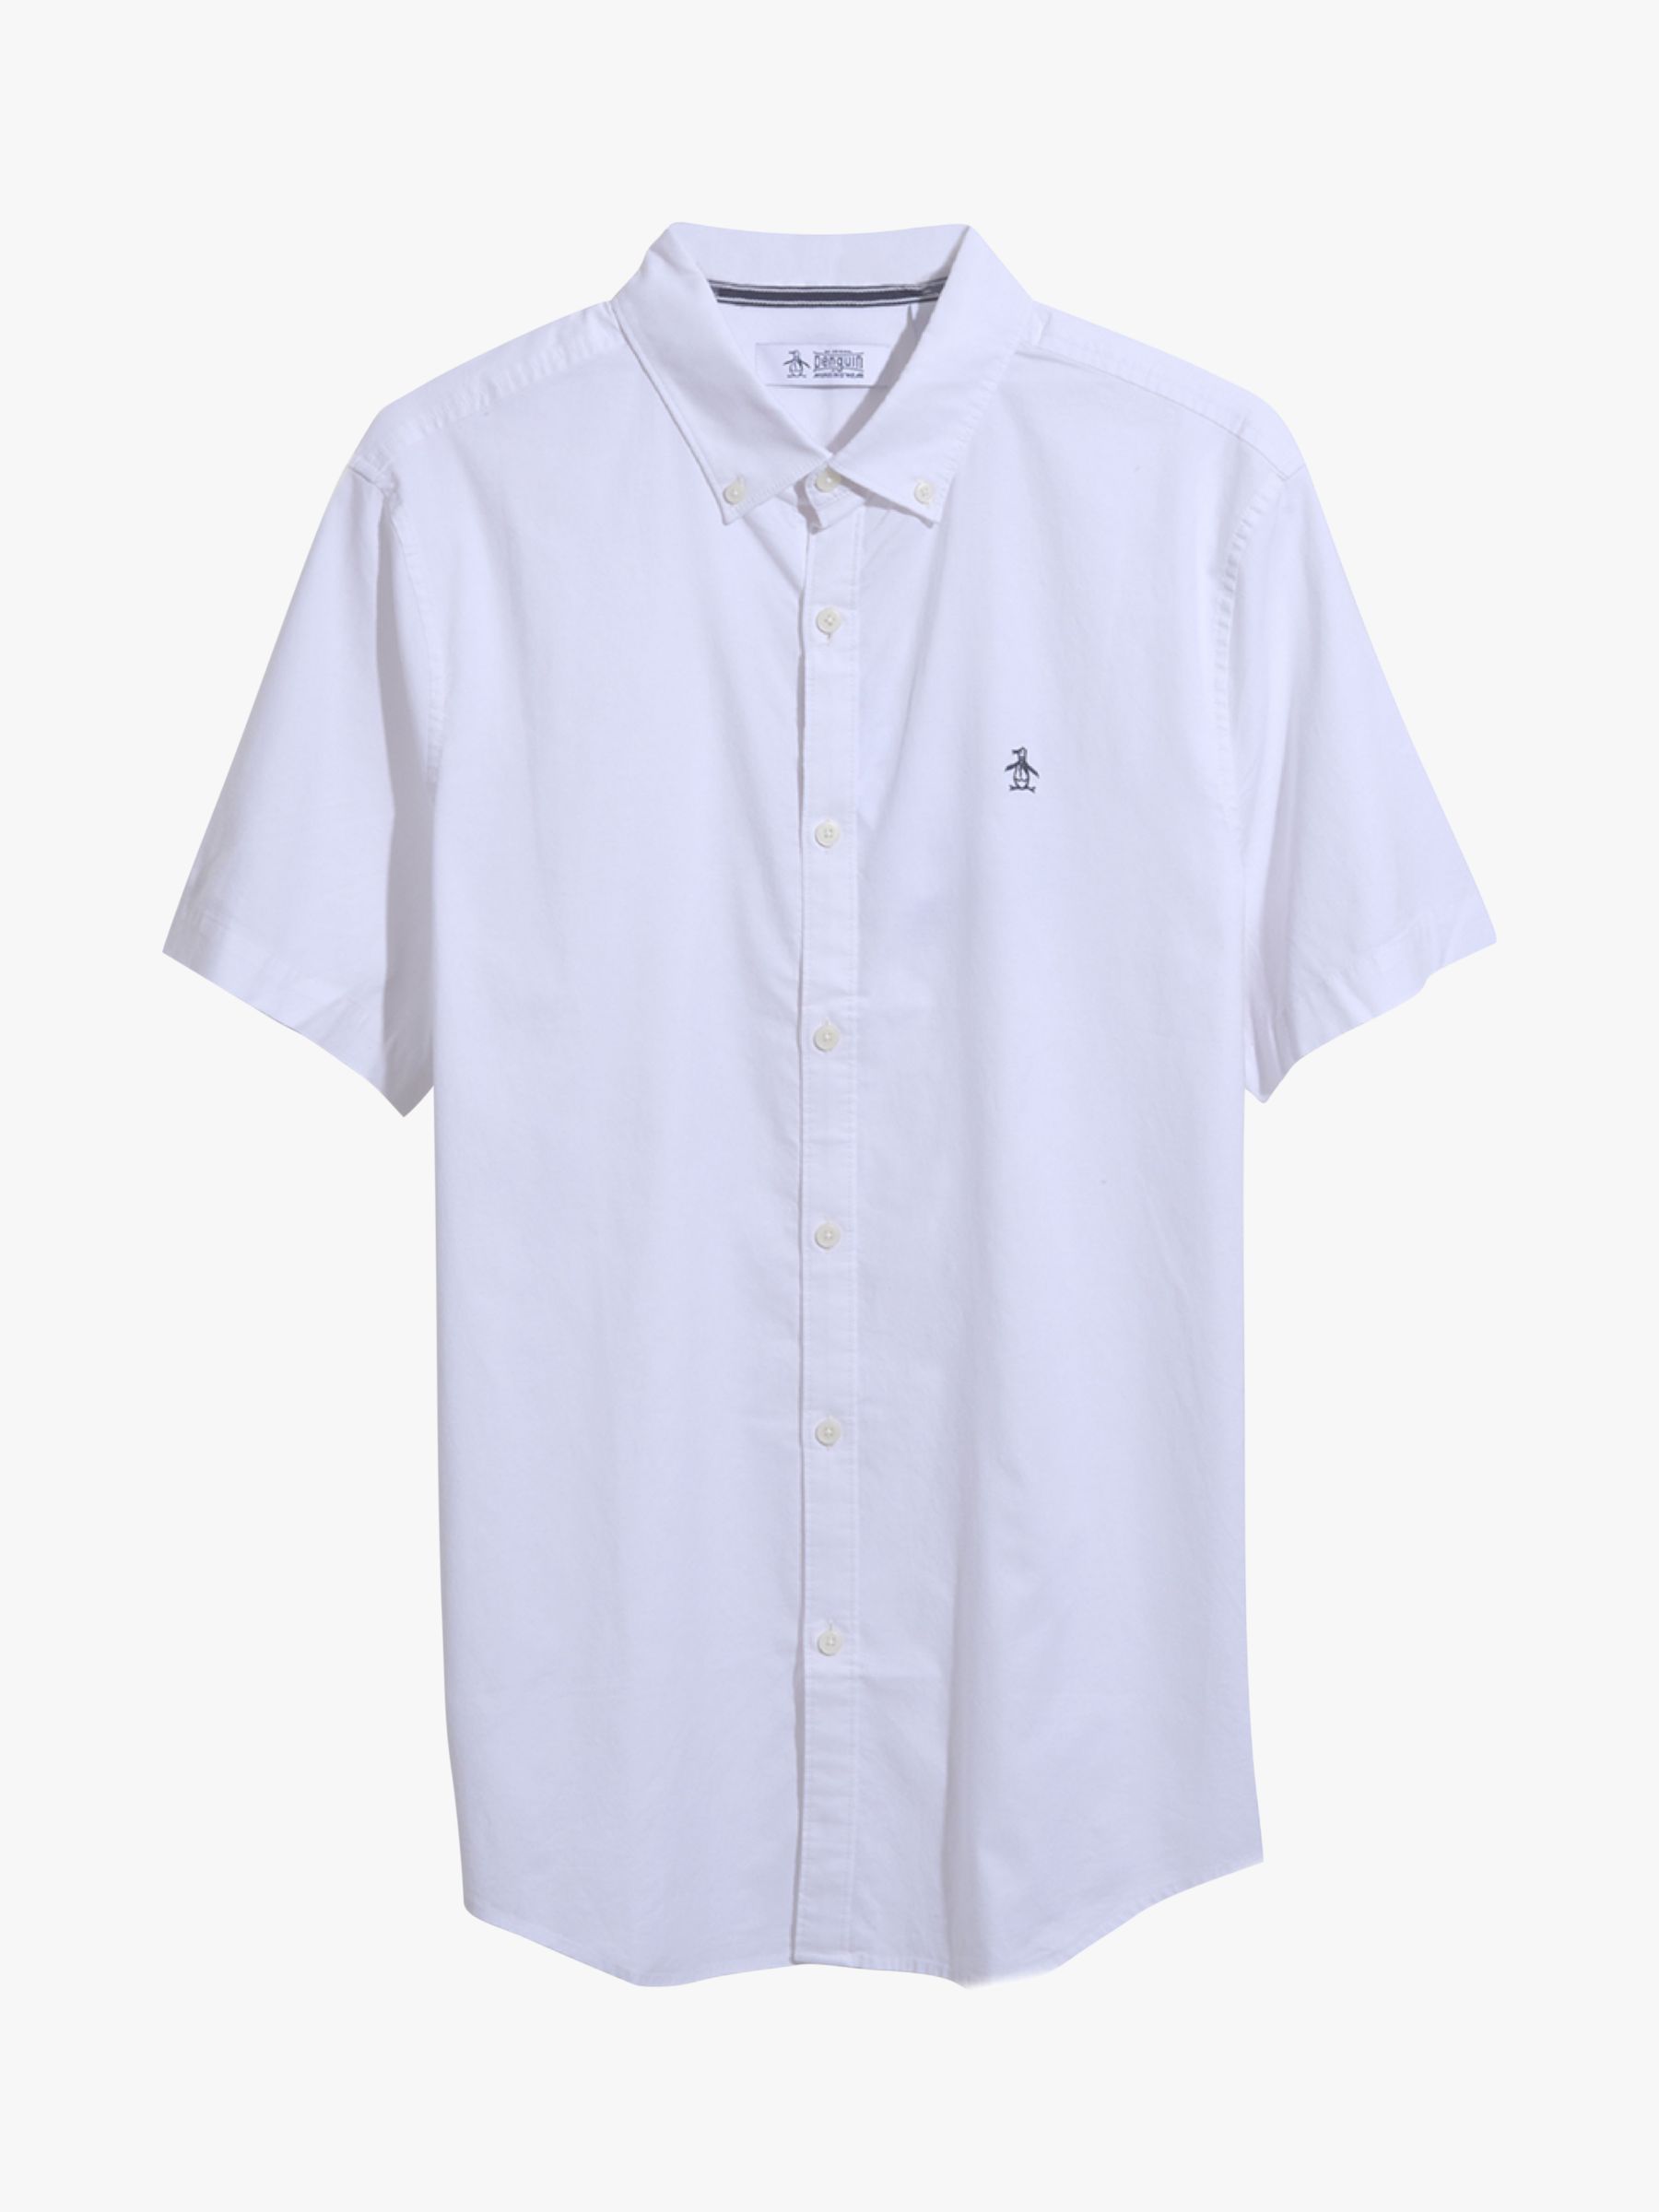 Original Penguin Short Sleeve Stretch Oxford Shirt, White, L